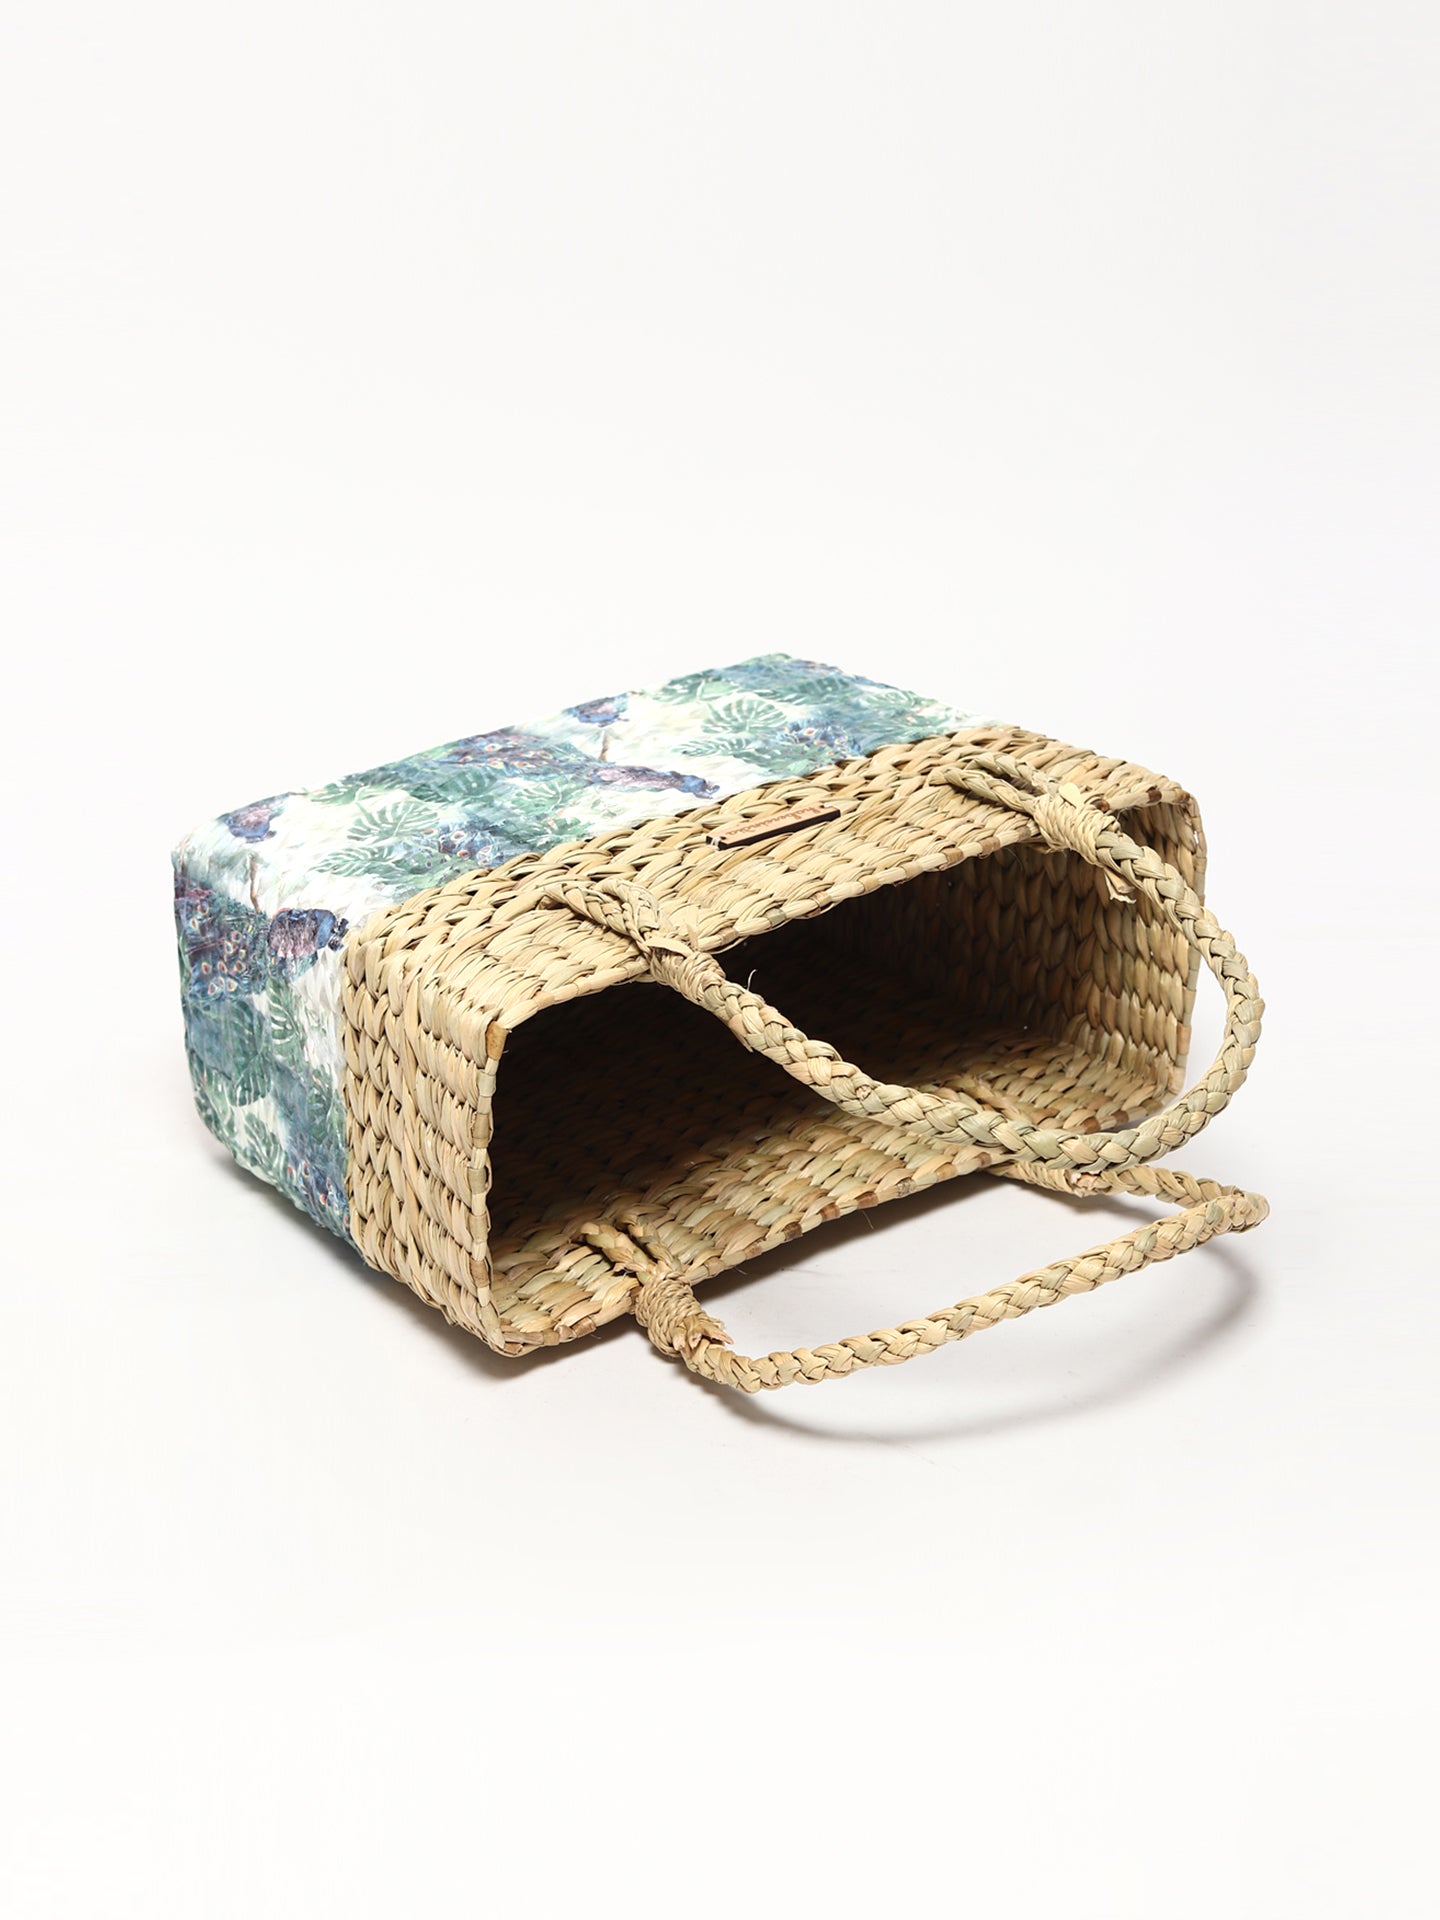 Vintage Indonesian Handmade Bamboo Basket Bag Purse Mid 20th Century | eBay